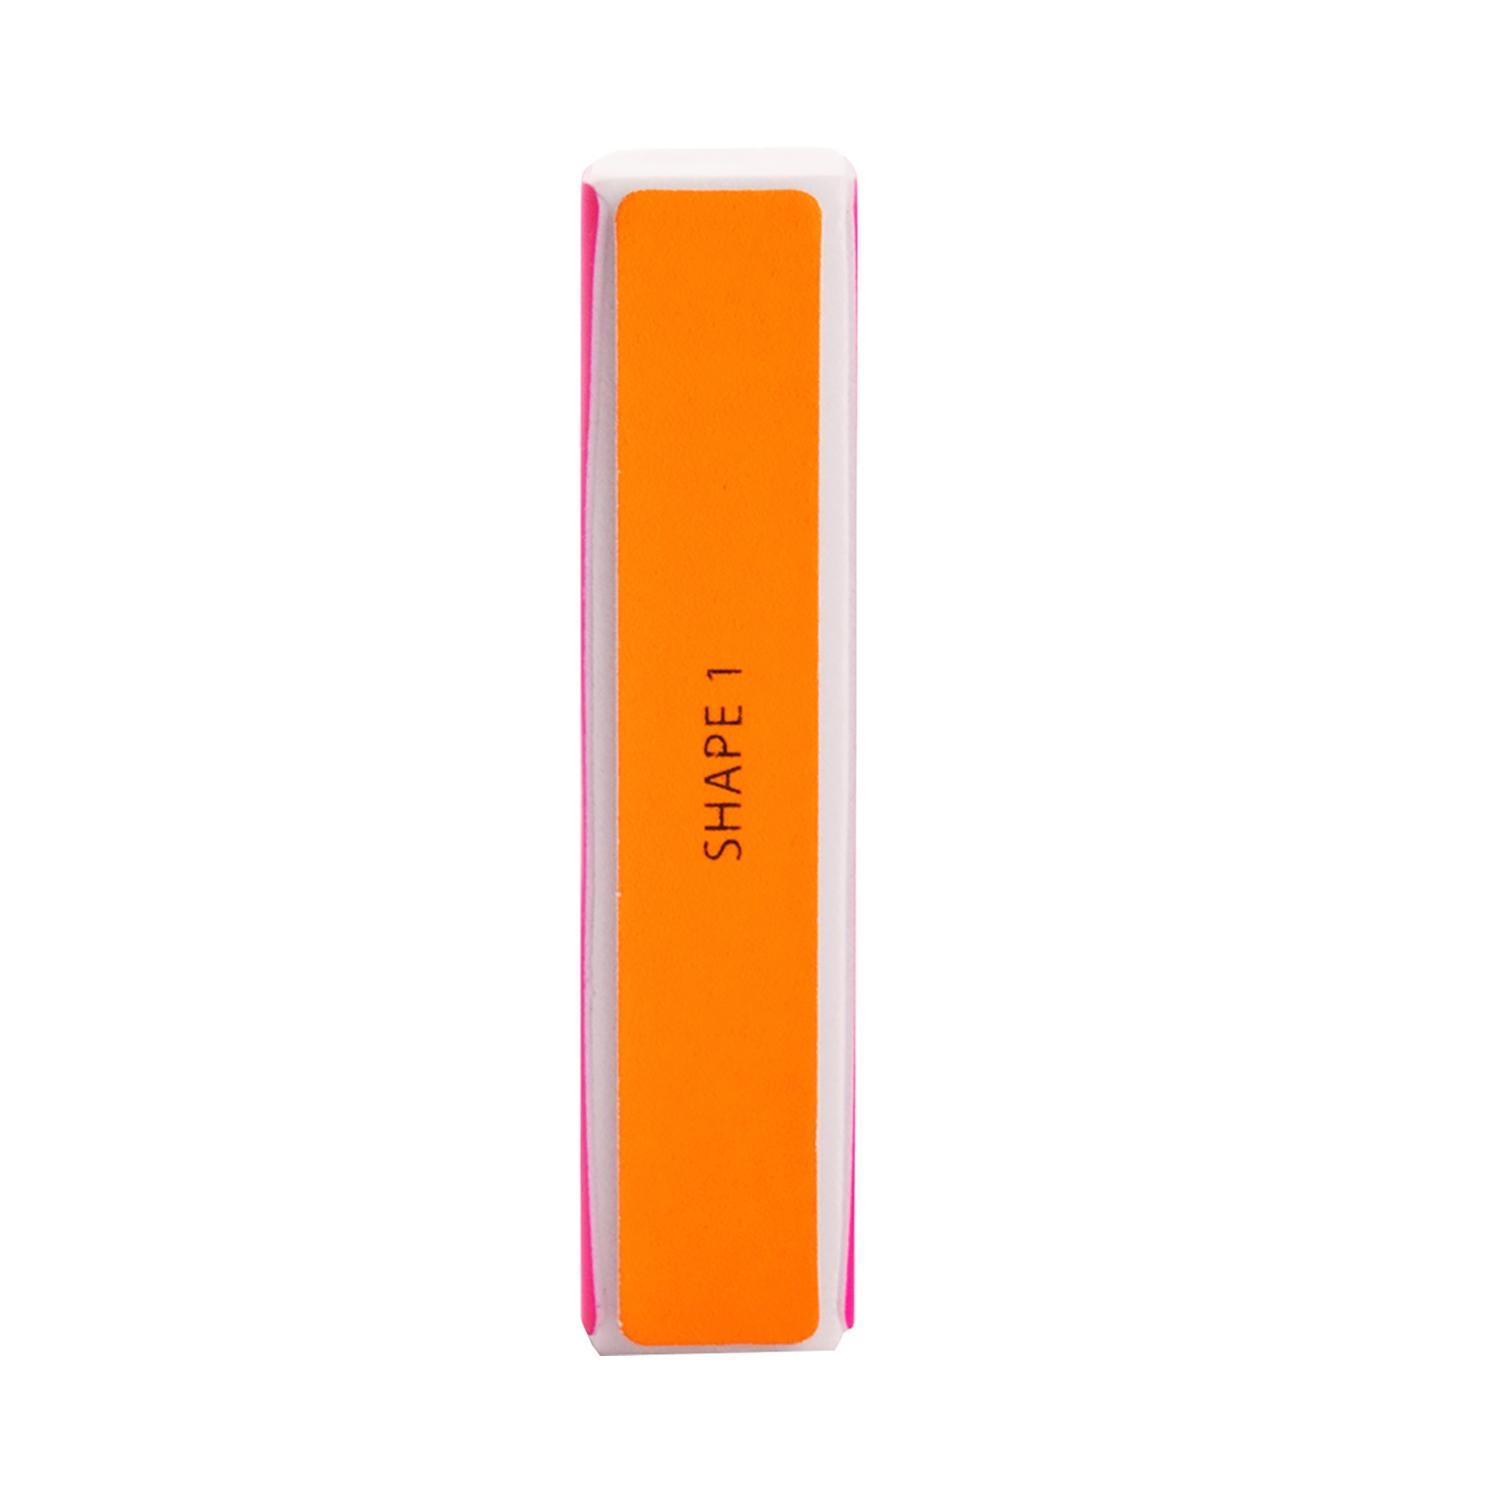 colorbar nail buffer quickfix 4-way nail buffer - pink, orange